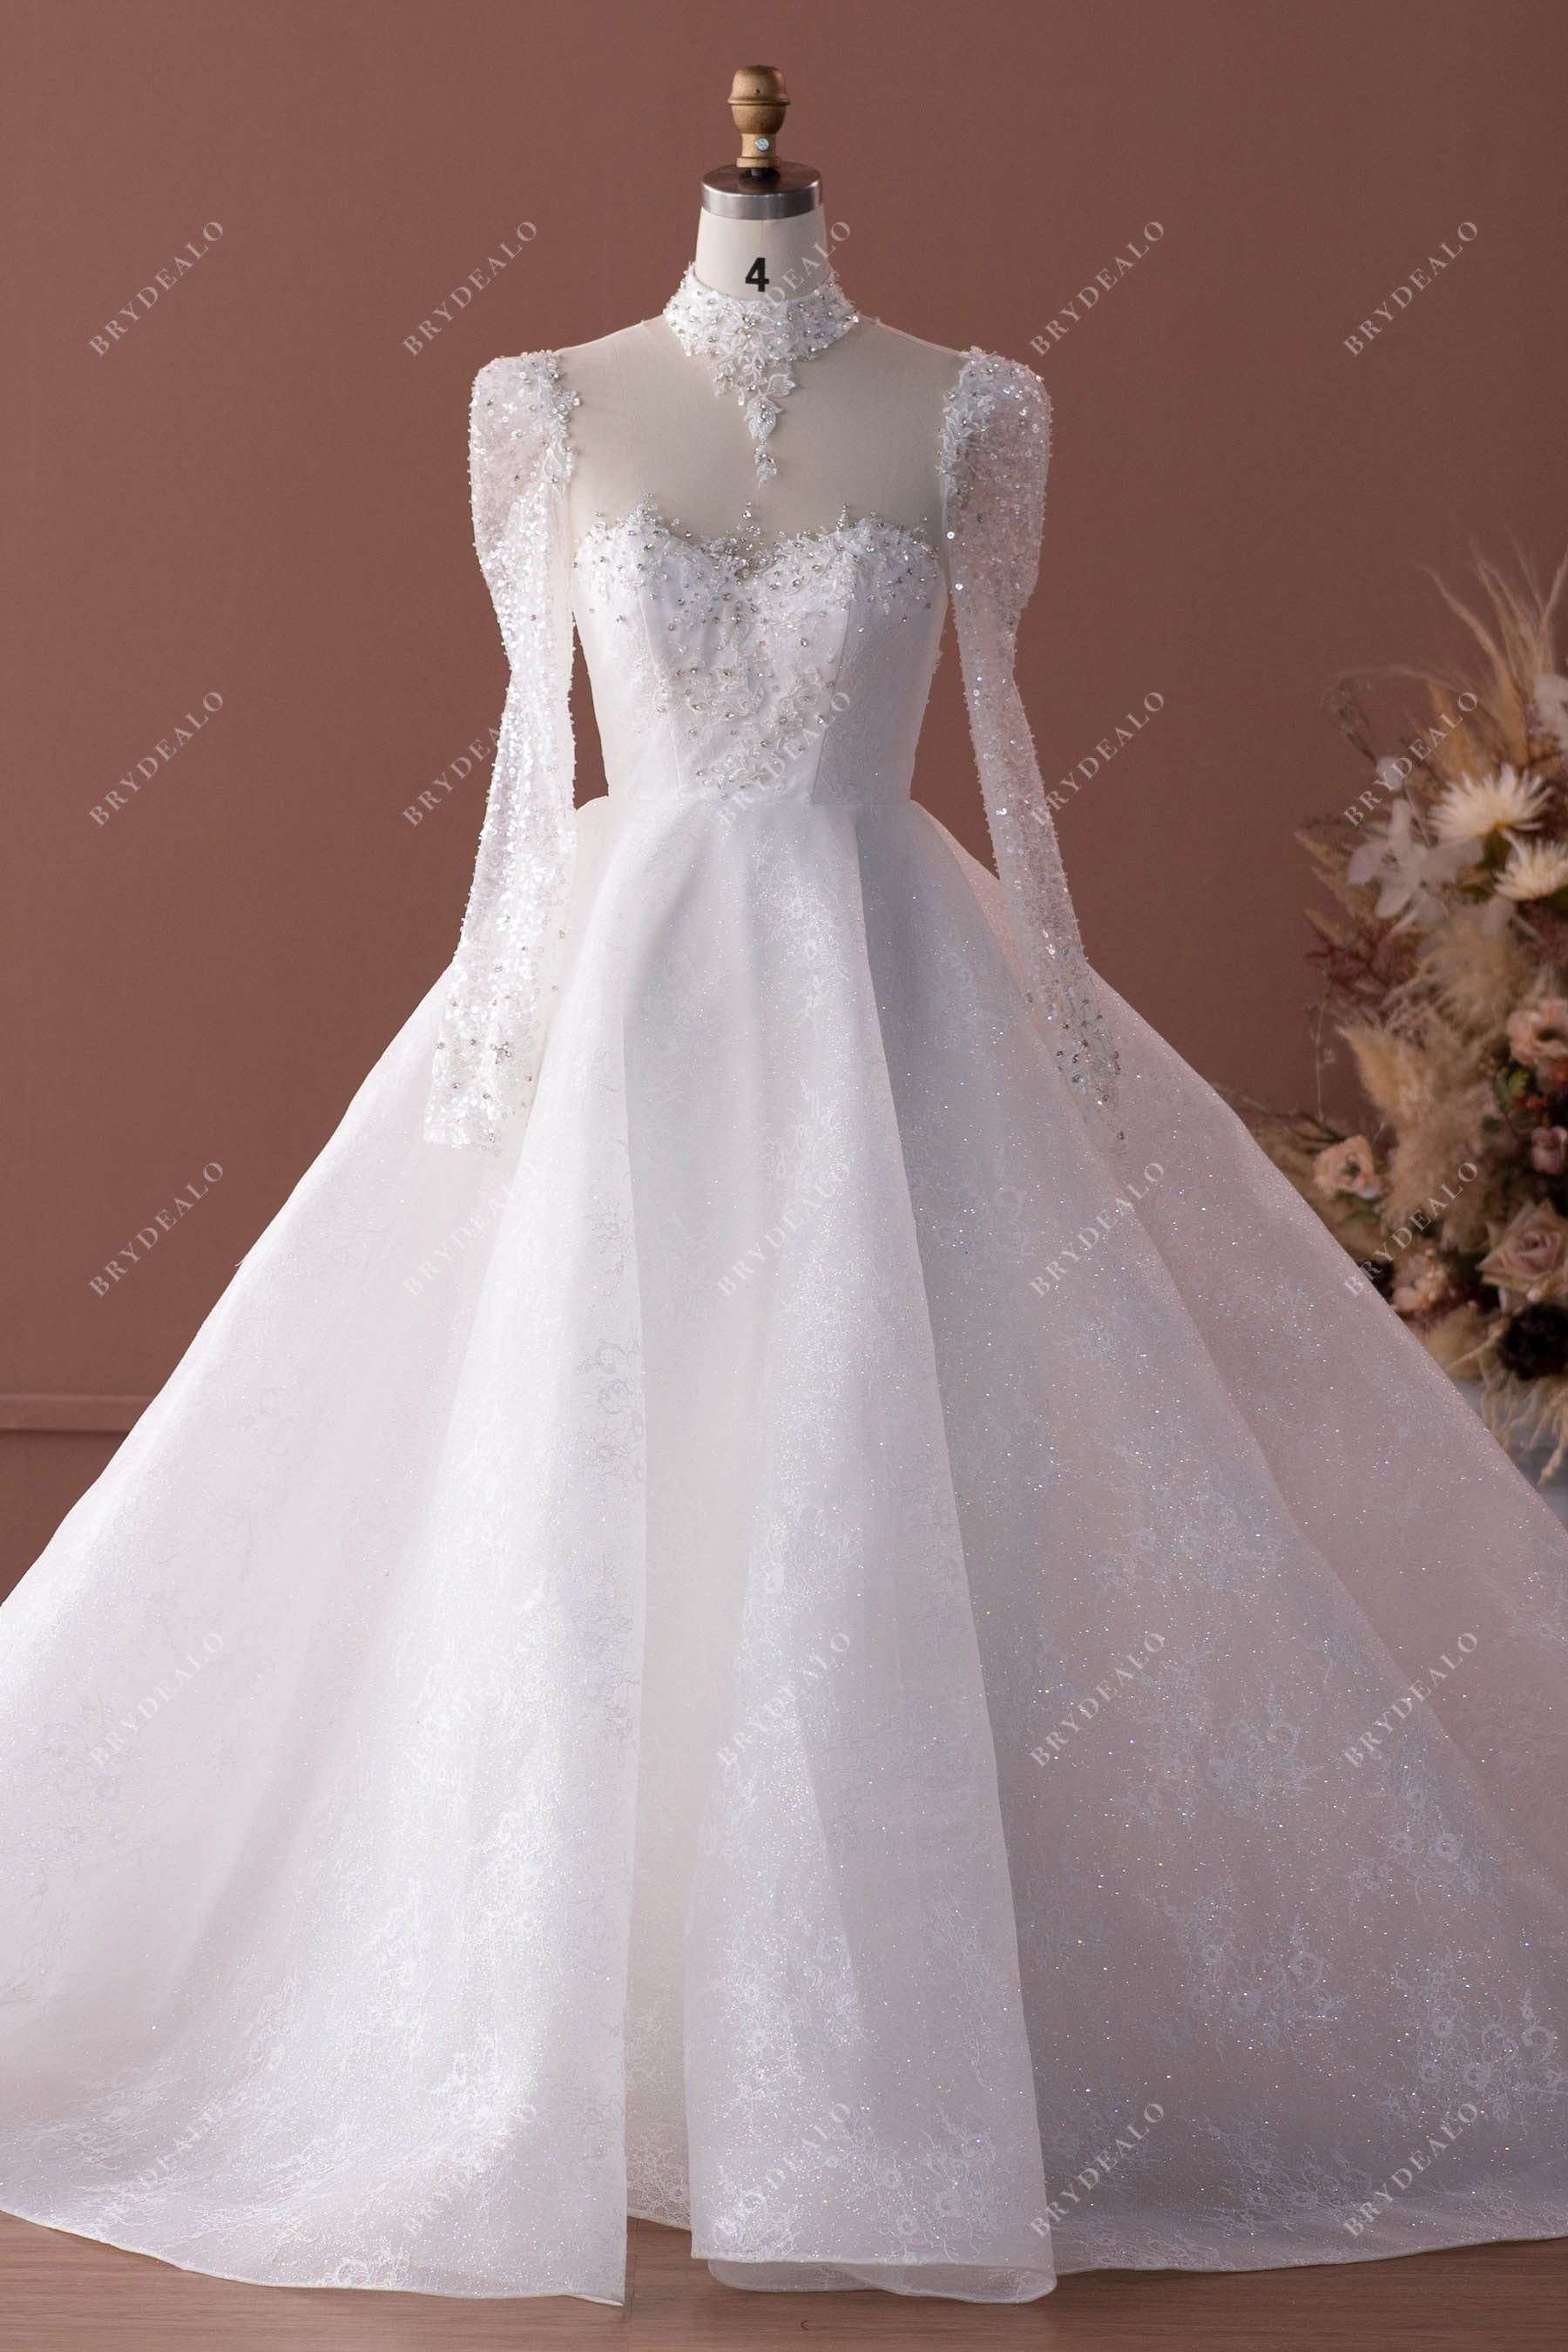 Luxury Sparkly Illusion Sleeved Ballgown Wedding Dress